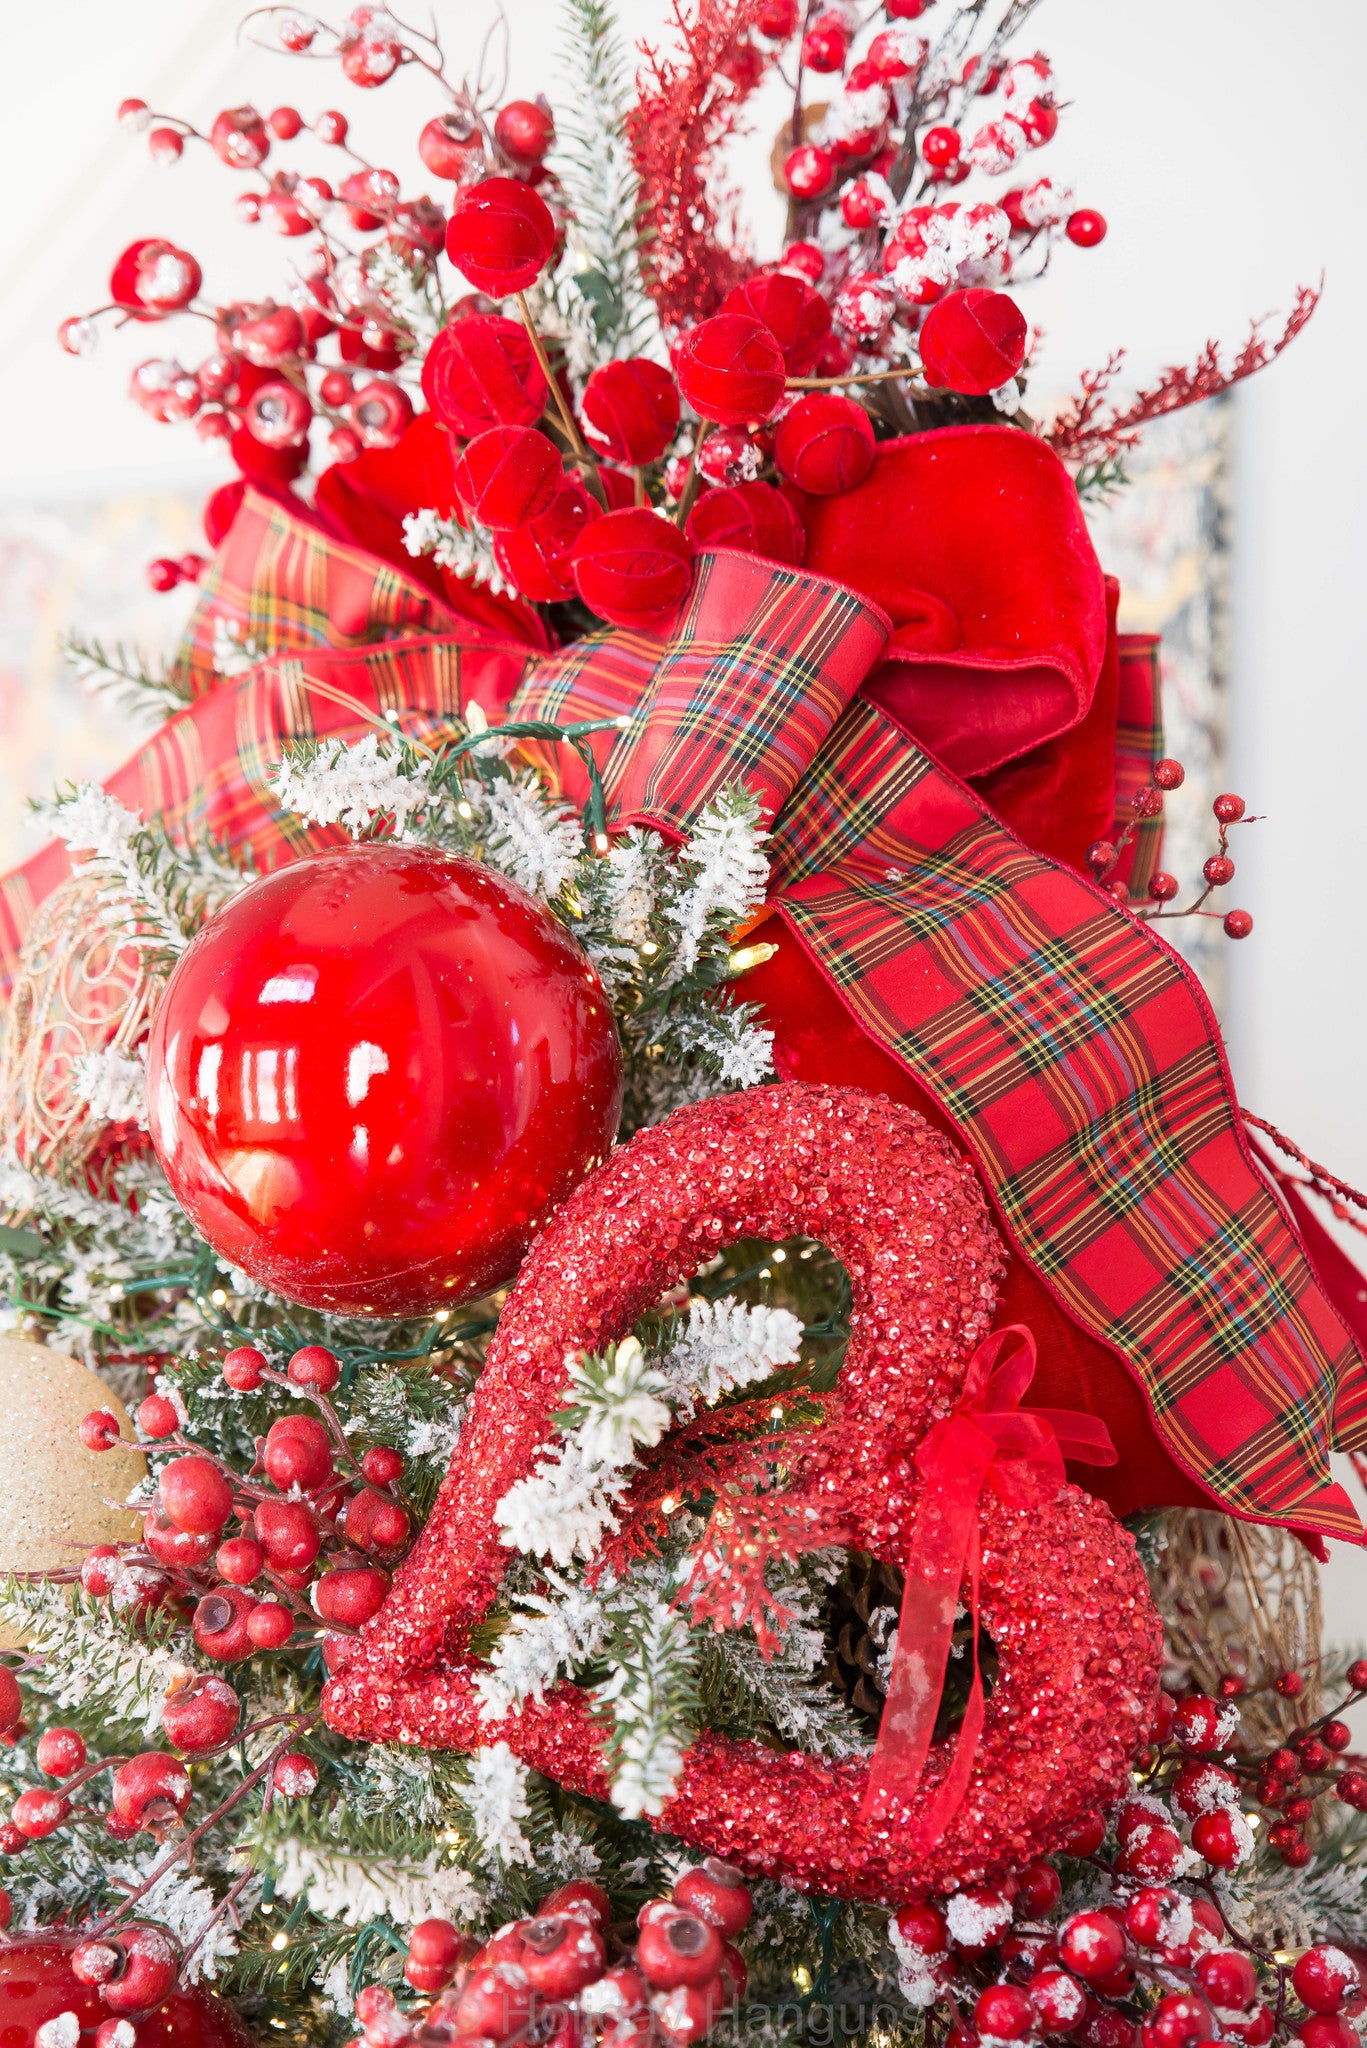 Valentine Christmas tree, Valentine decor ideas, Valentine tree, red ball ornaments, red plaid ribbon